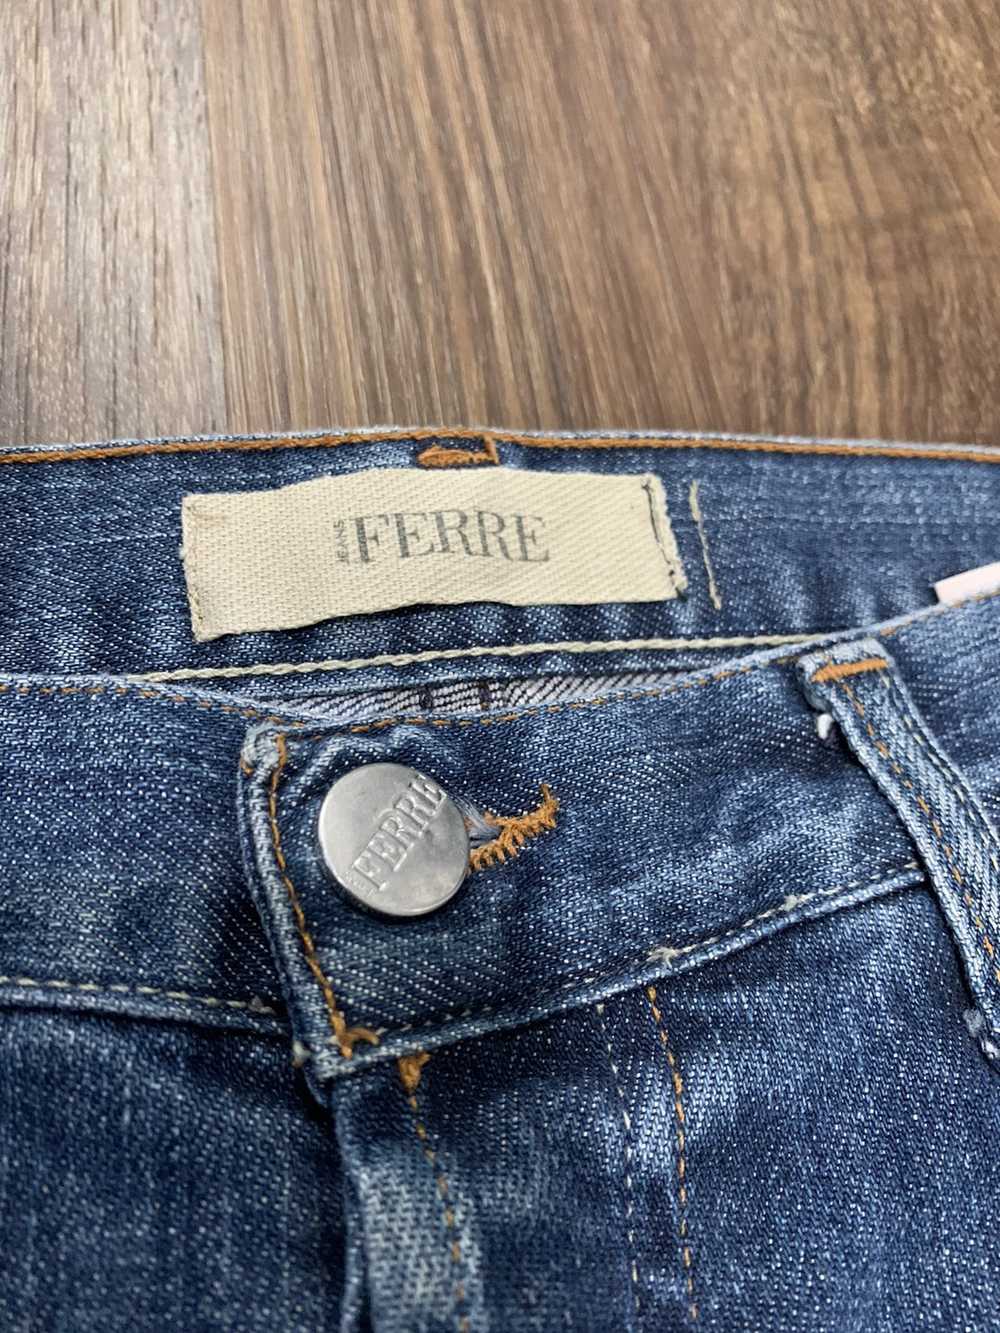 Ferre × Gianfranco Ferre Jeans Ferre Italy Denim - image 3